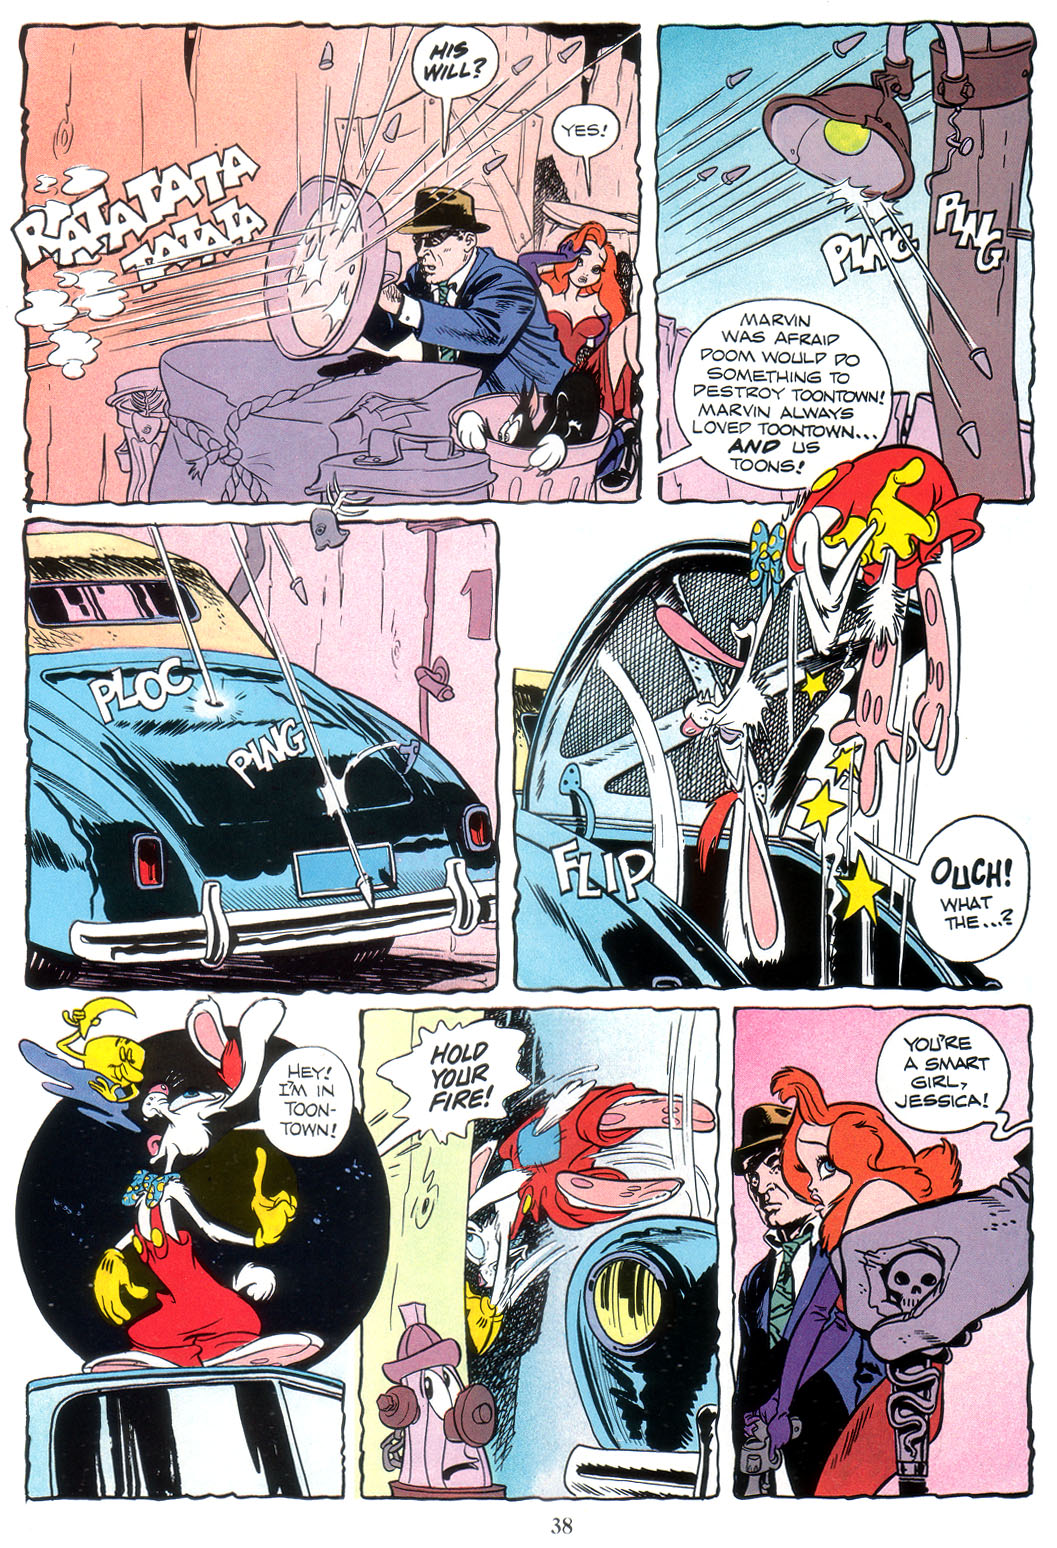 Marvel Graphic Novel issue 41 - Who Framed Roger Rabbit - Page 40